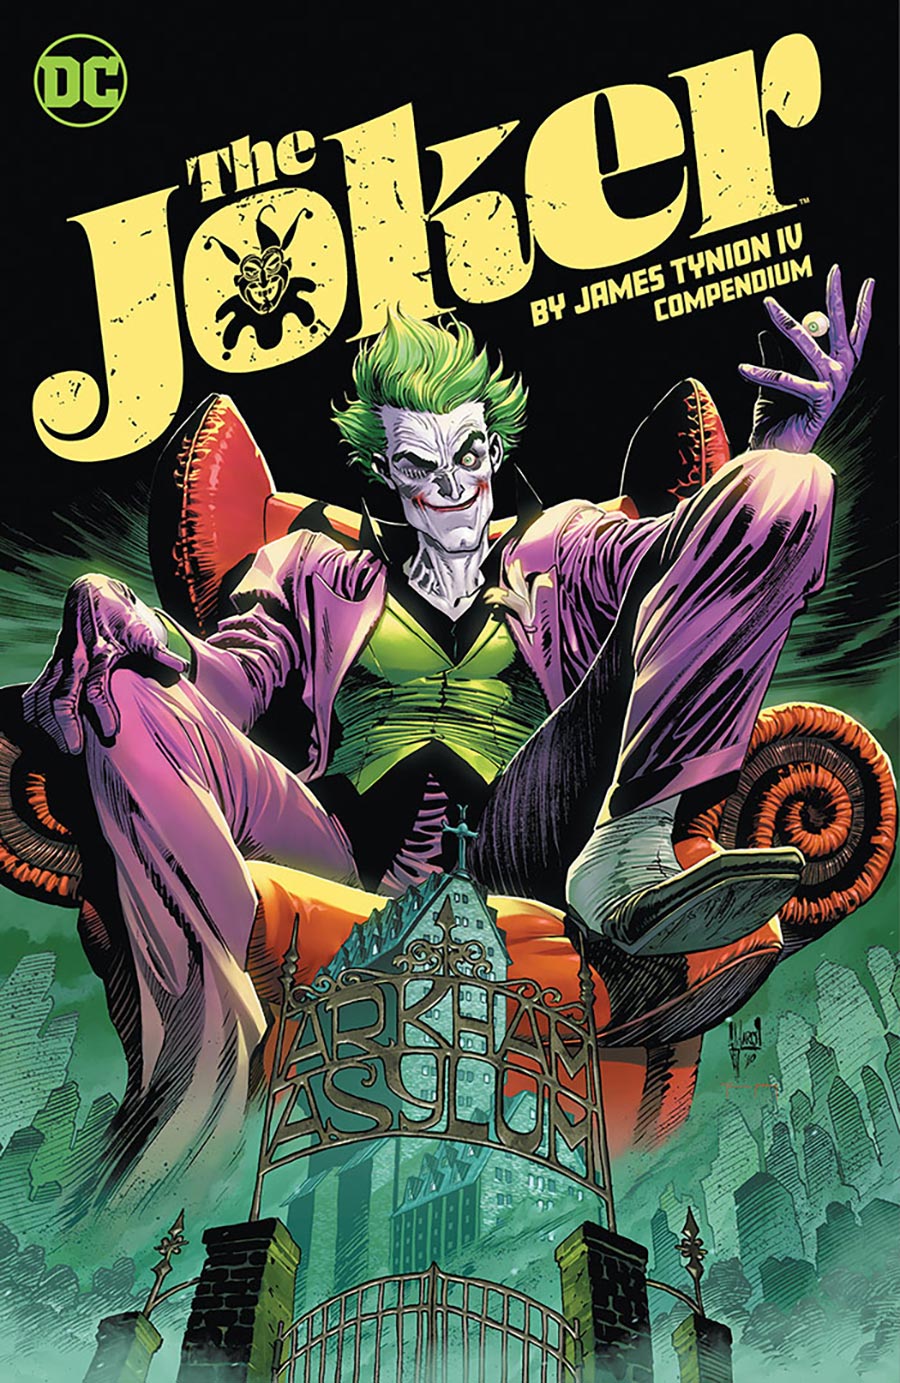 Joker By James Tynion IV Compendium TP